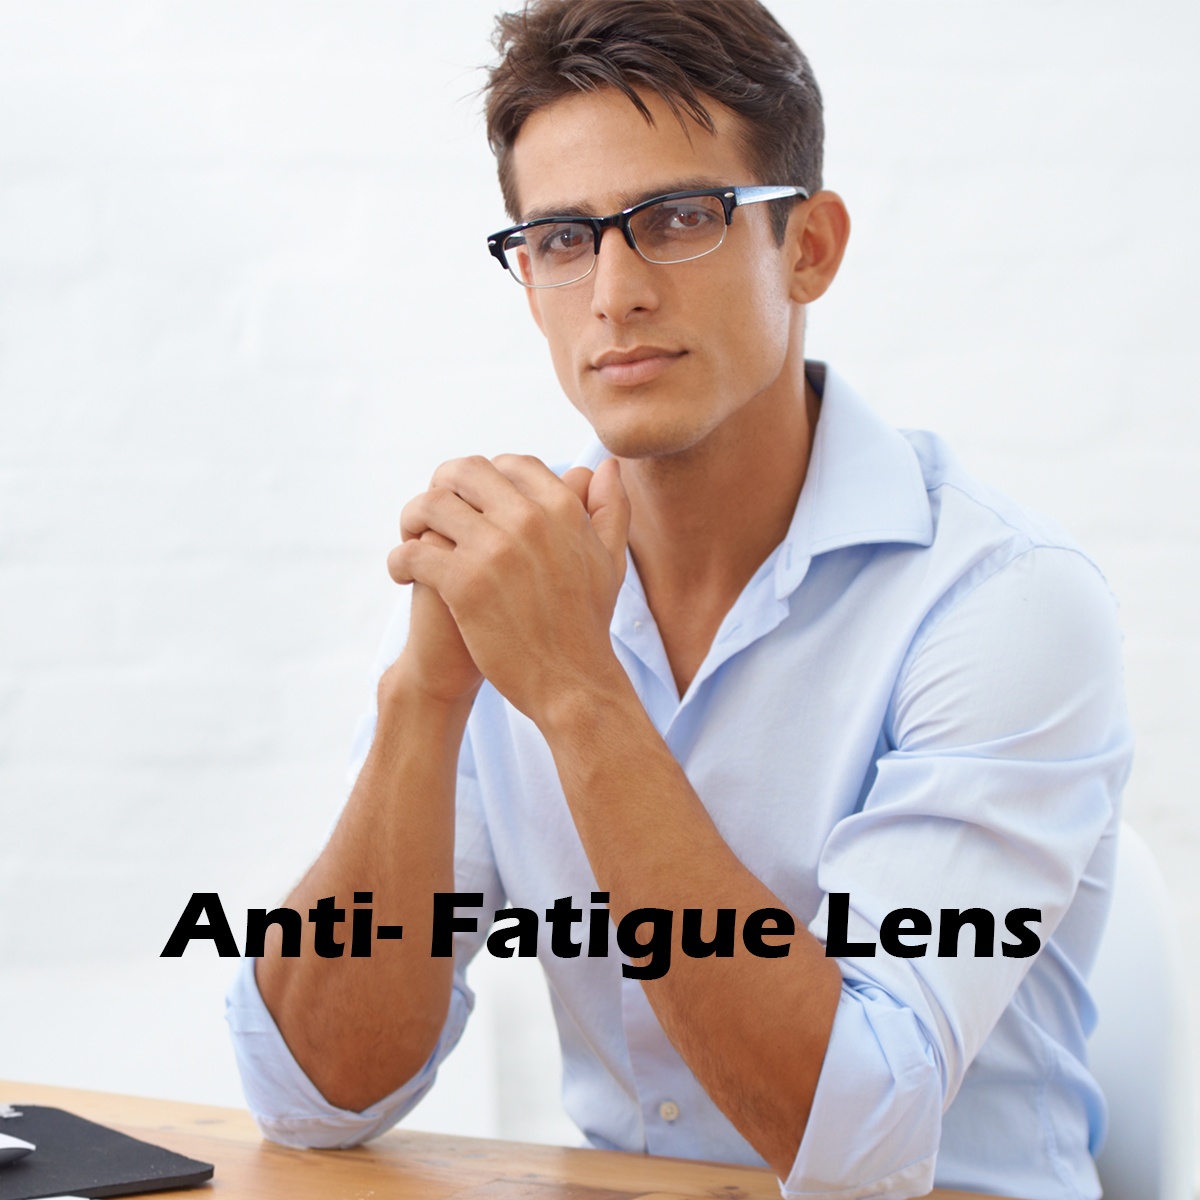 Anti-Fatigue Lenses